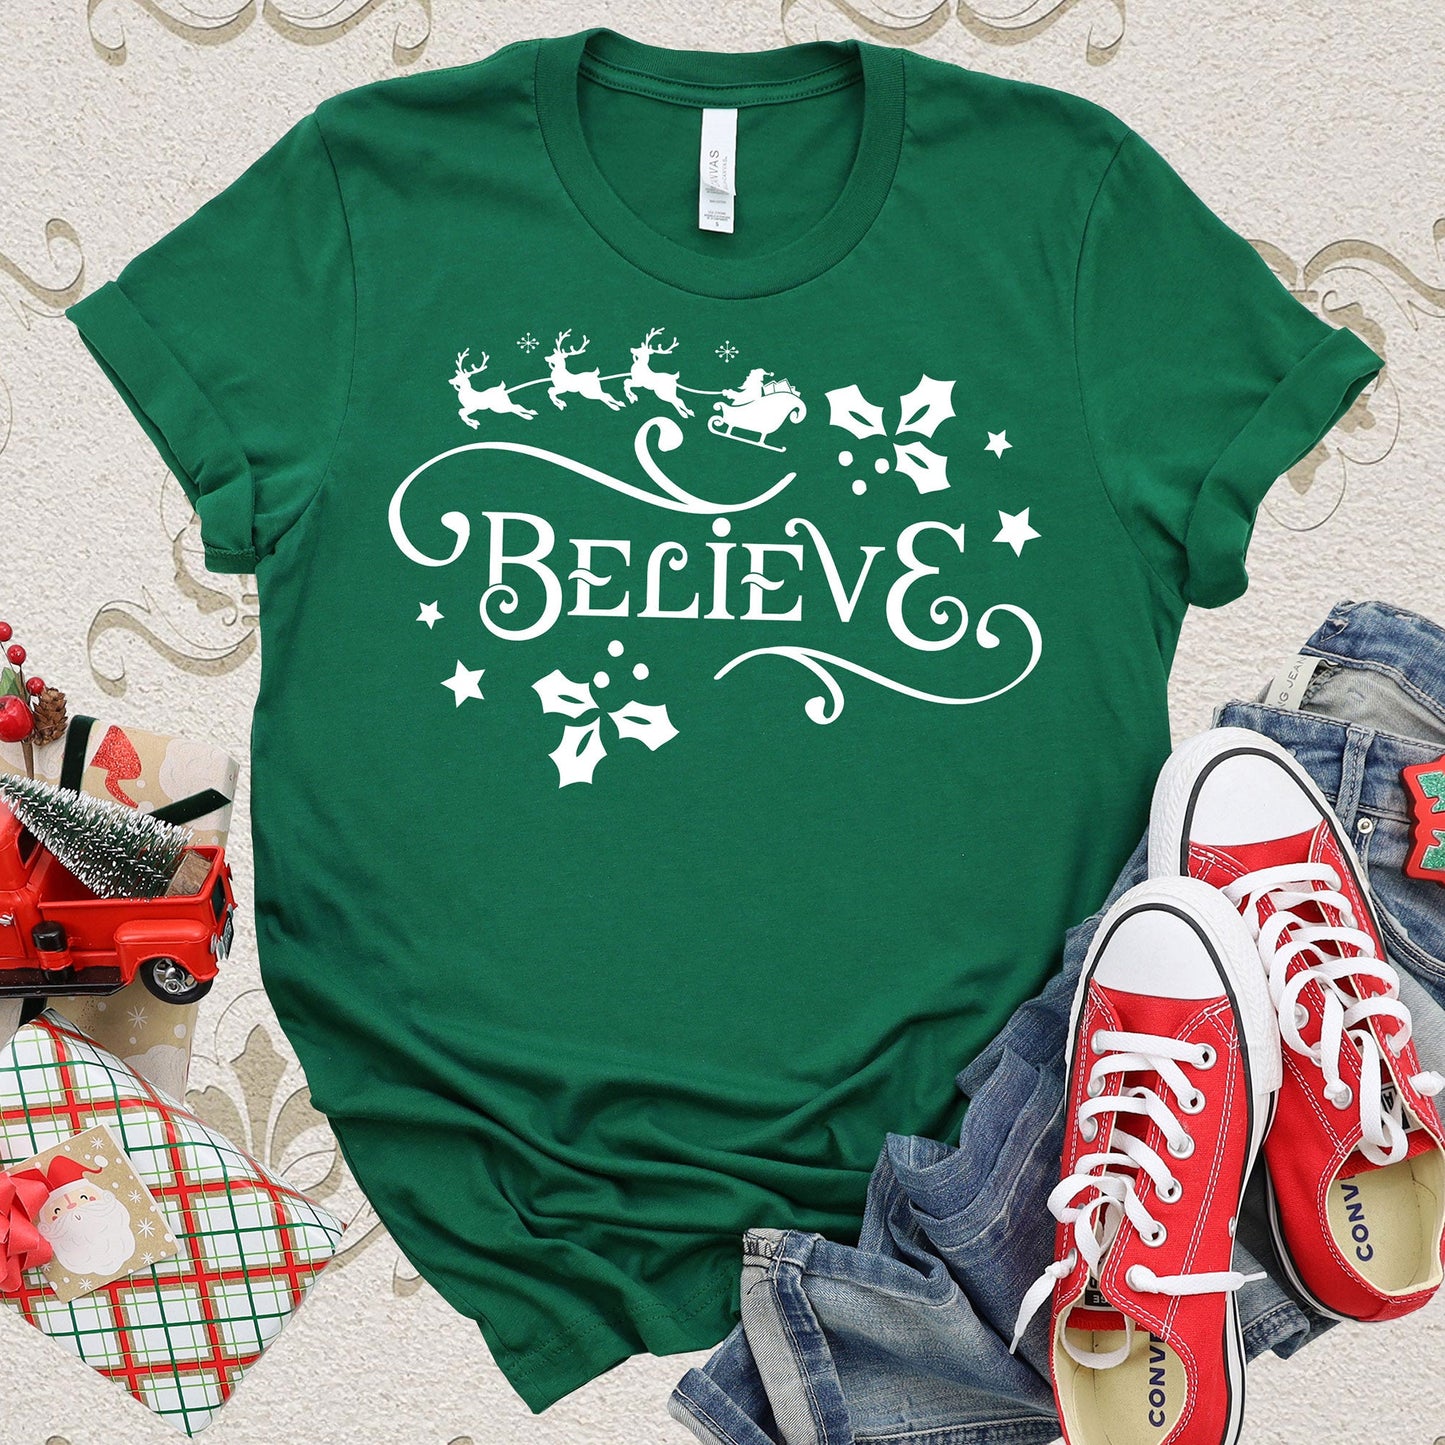 Believe T-shirt, Christmas Tee